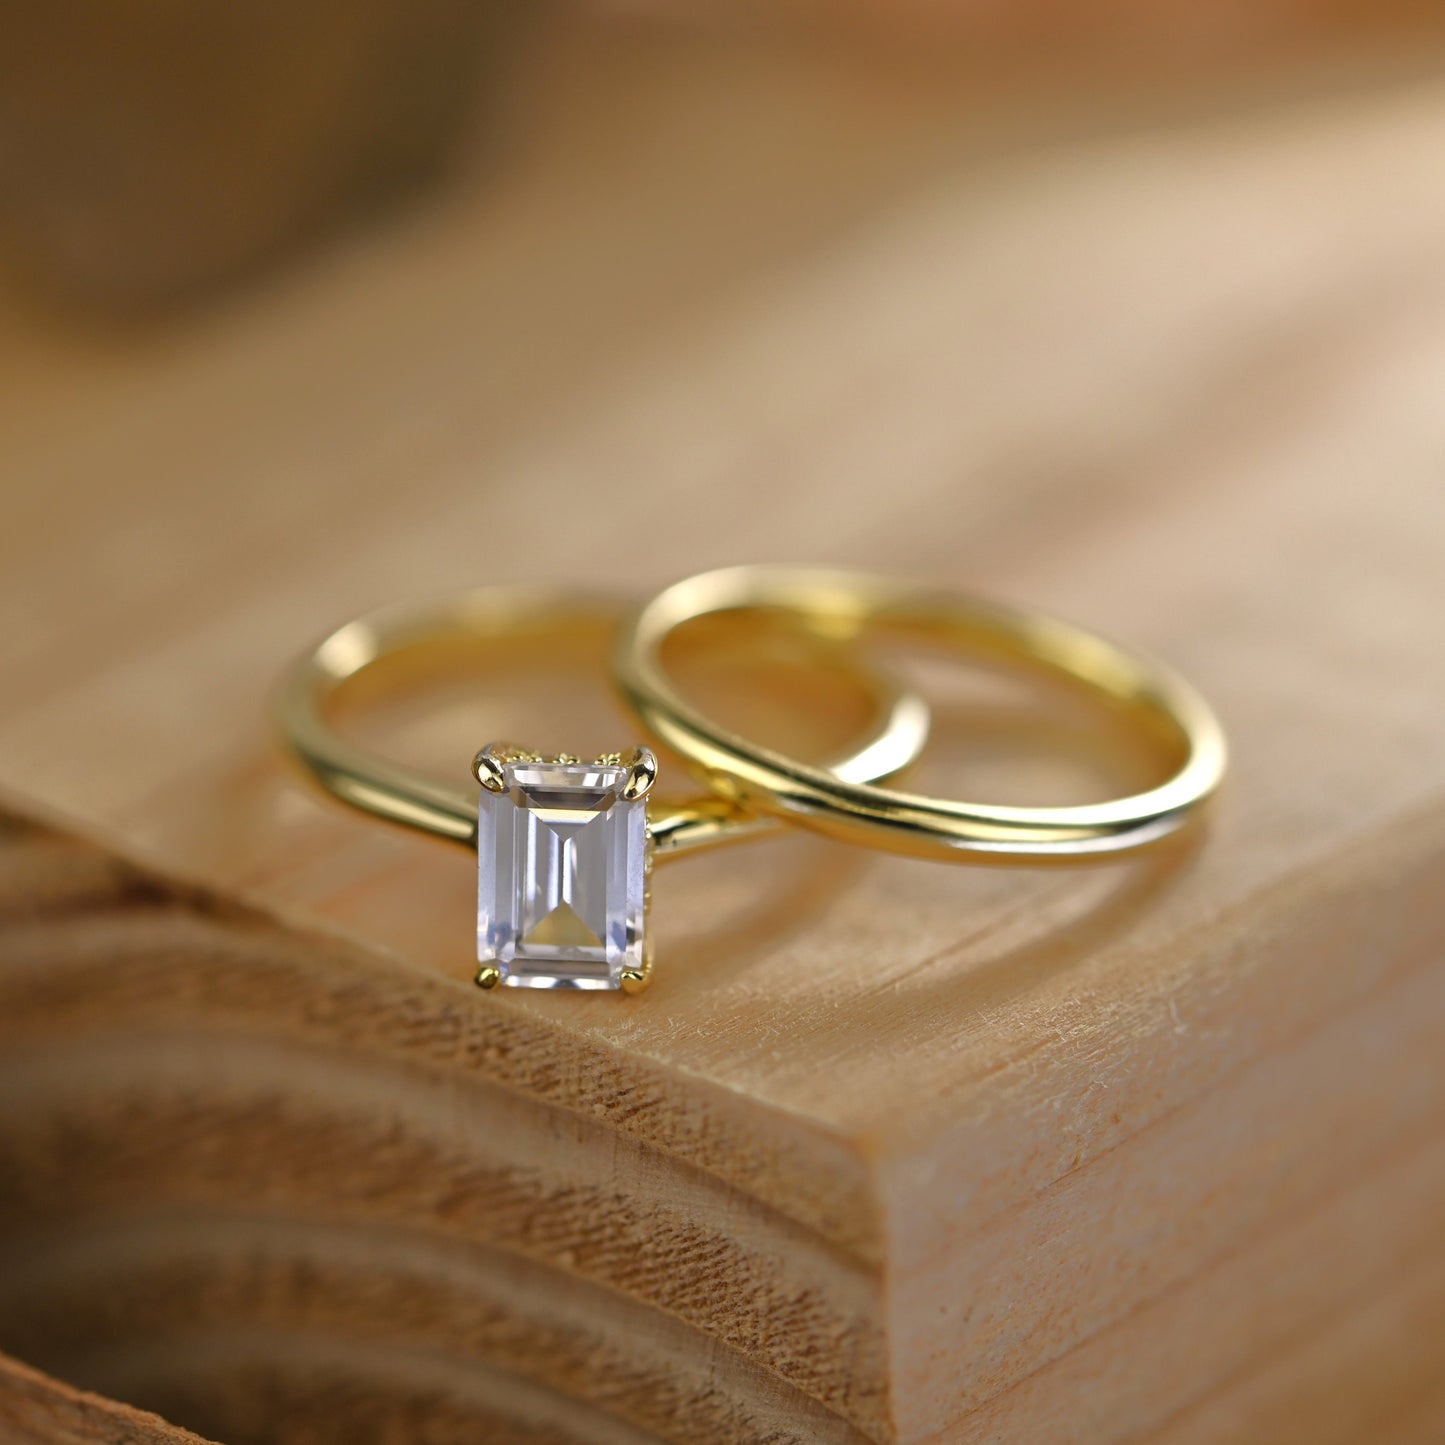 0.5Ct Golden Solitaire Emerald Cut Diamond Engagement Ring Set